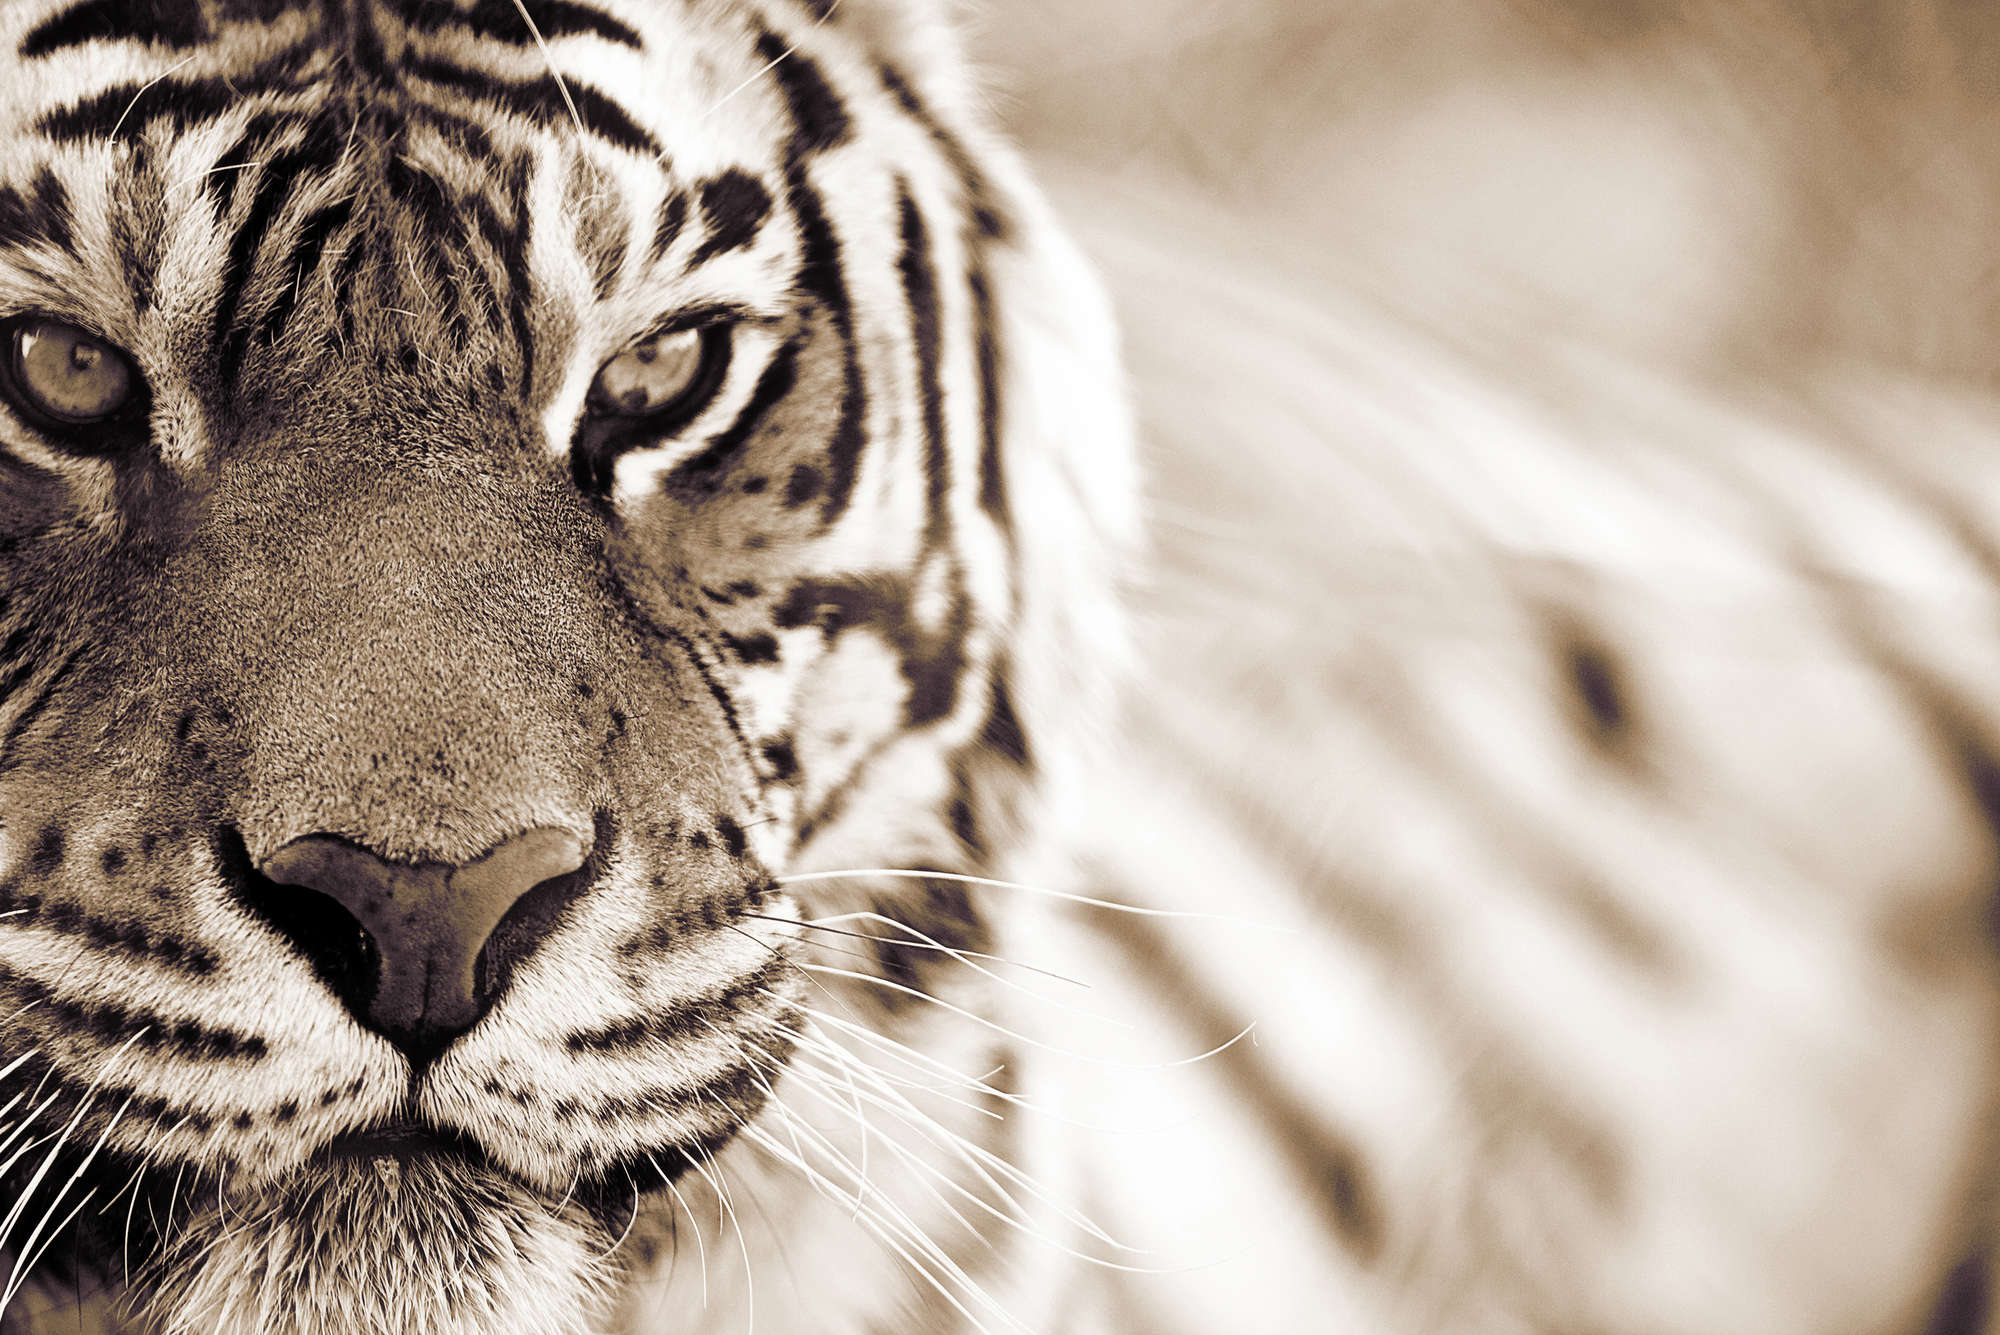             Animal Wallpaper Close-up of Tiger - Matt Smooth Non-woven
        